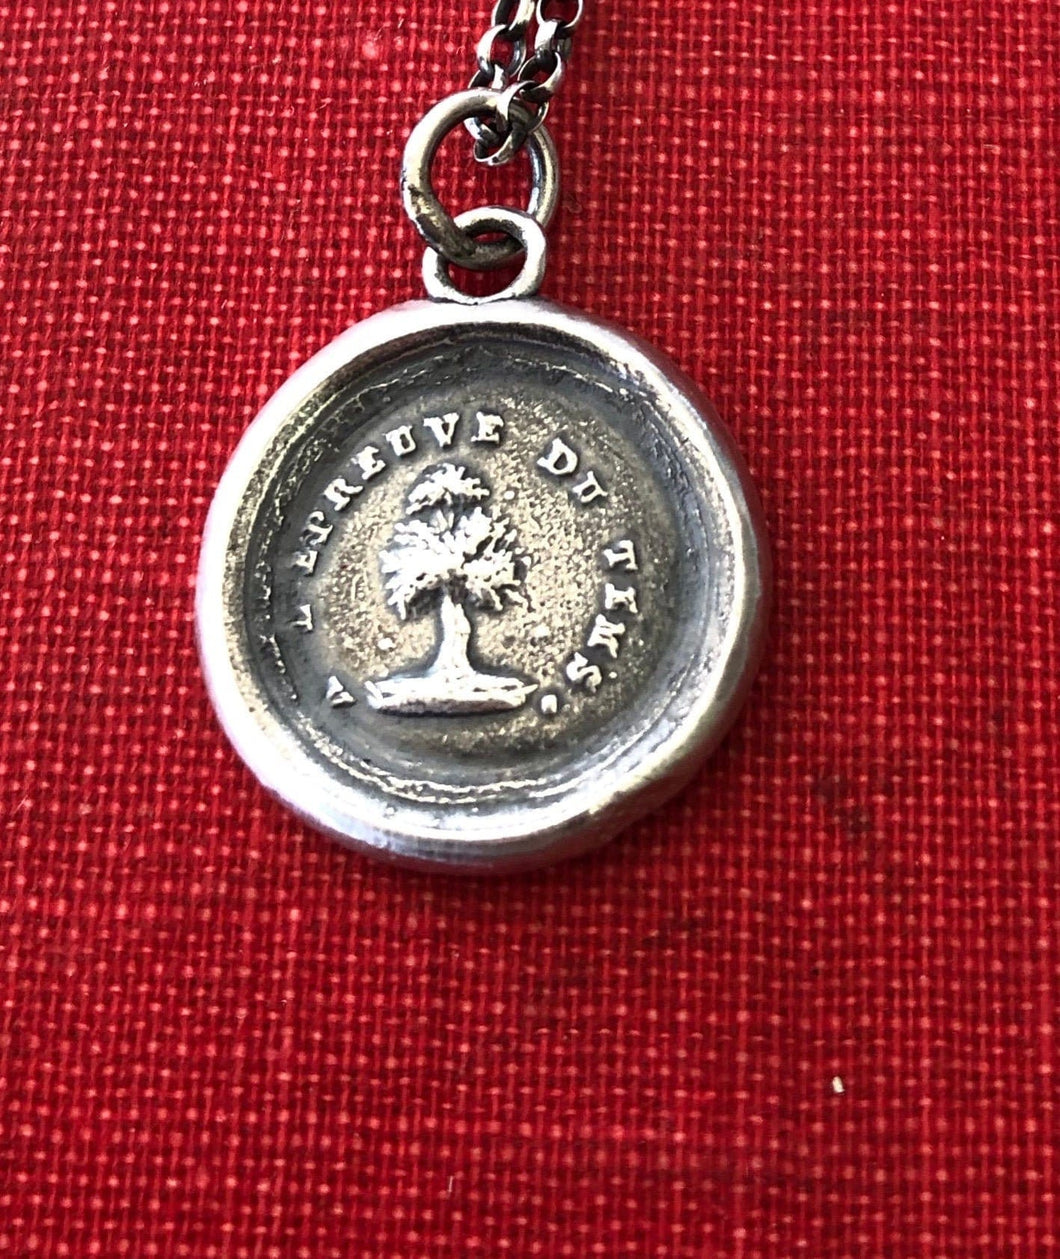 Oak Tree pendant, antique wax letter seal.  loyal and steadfast pendant